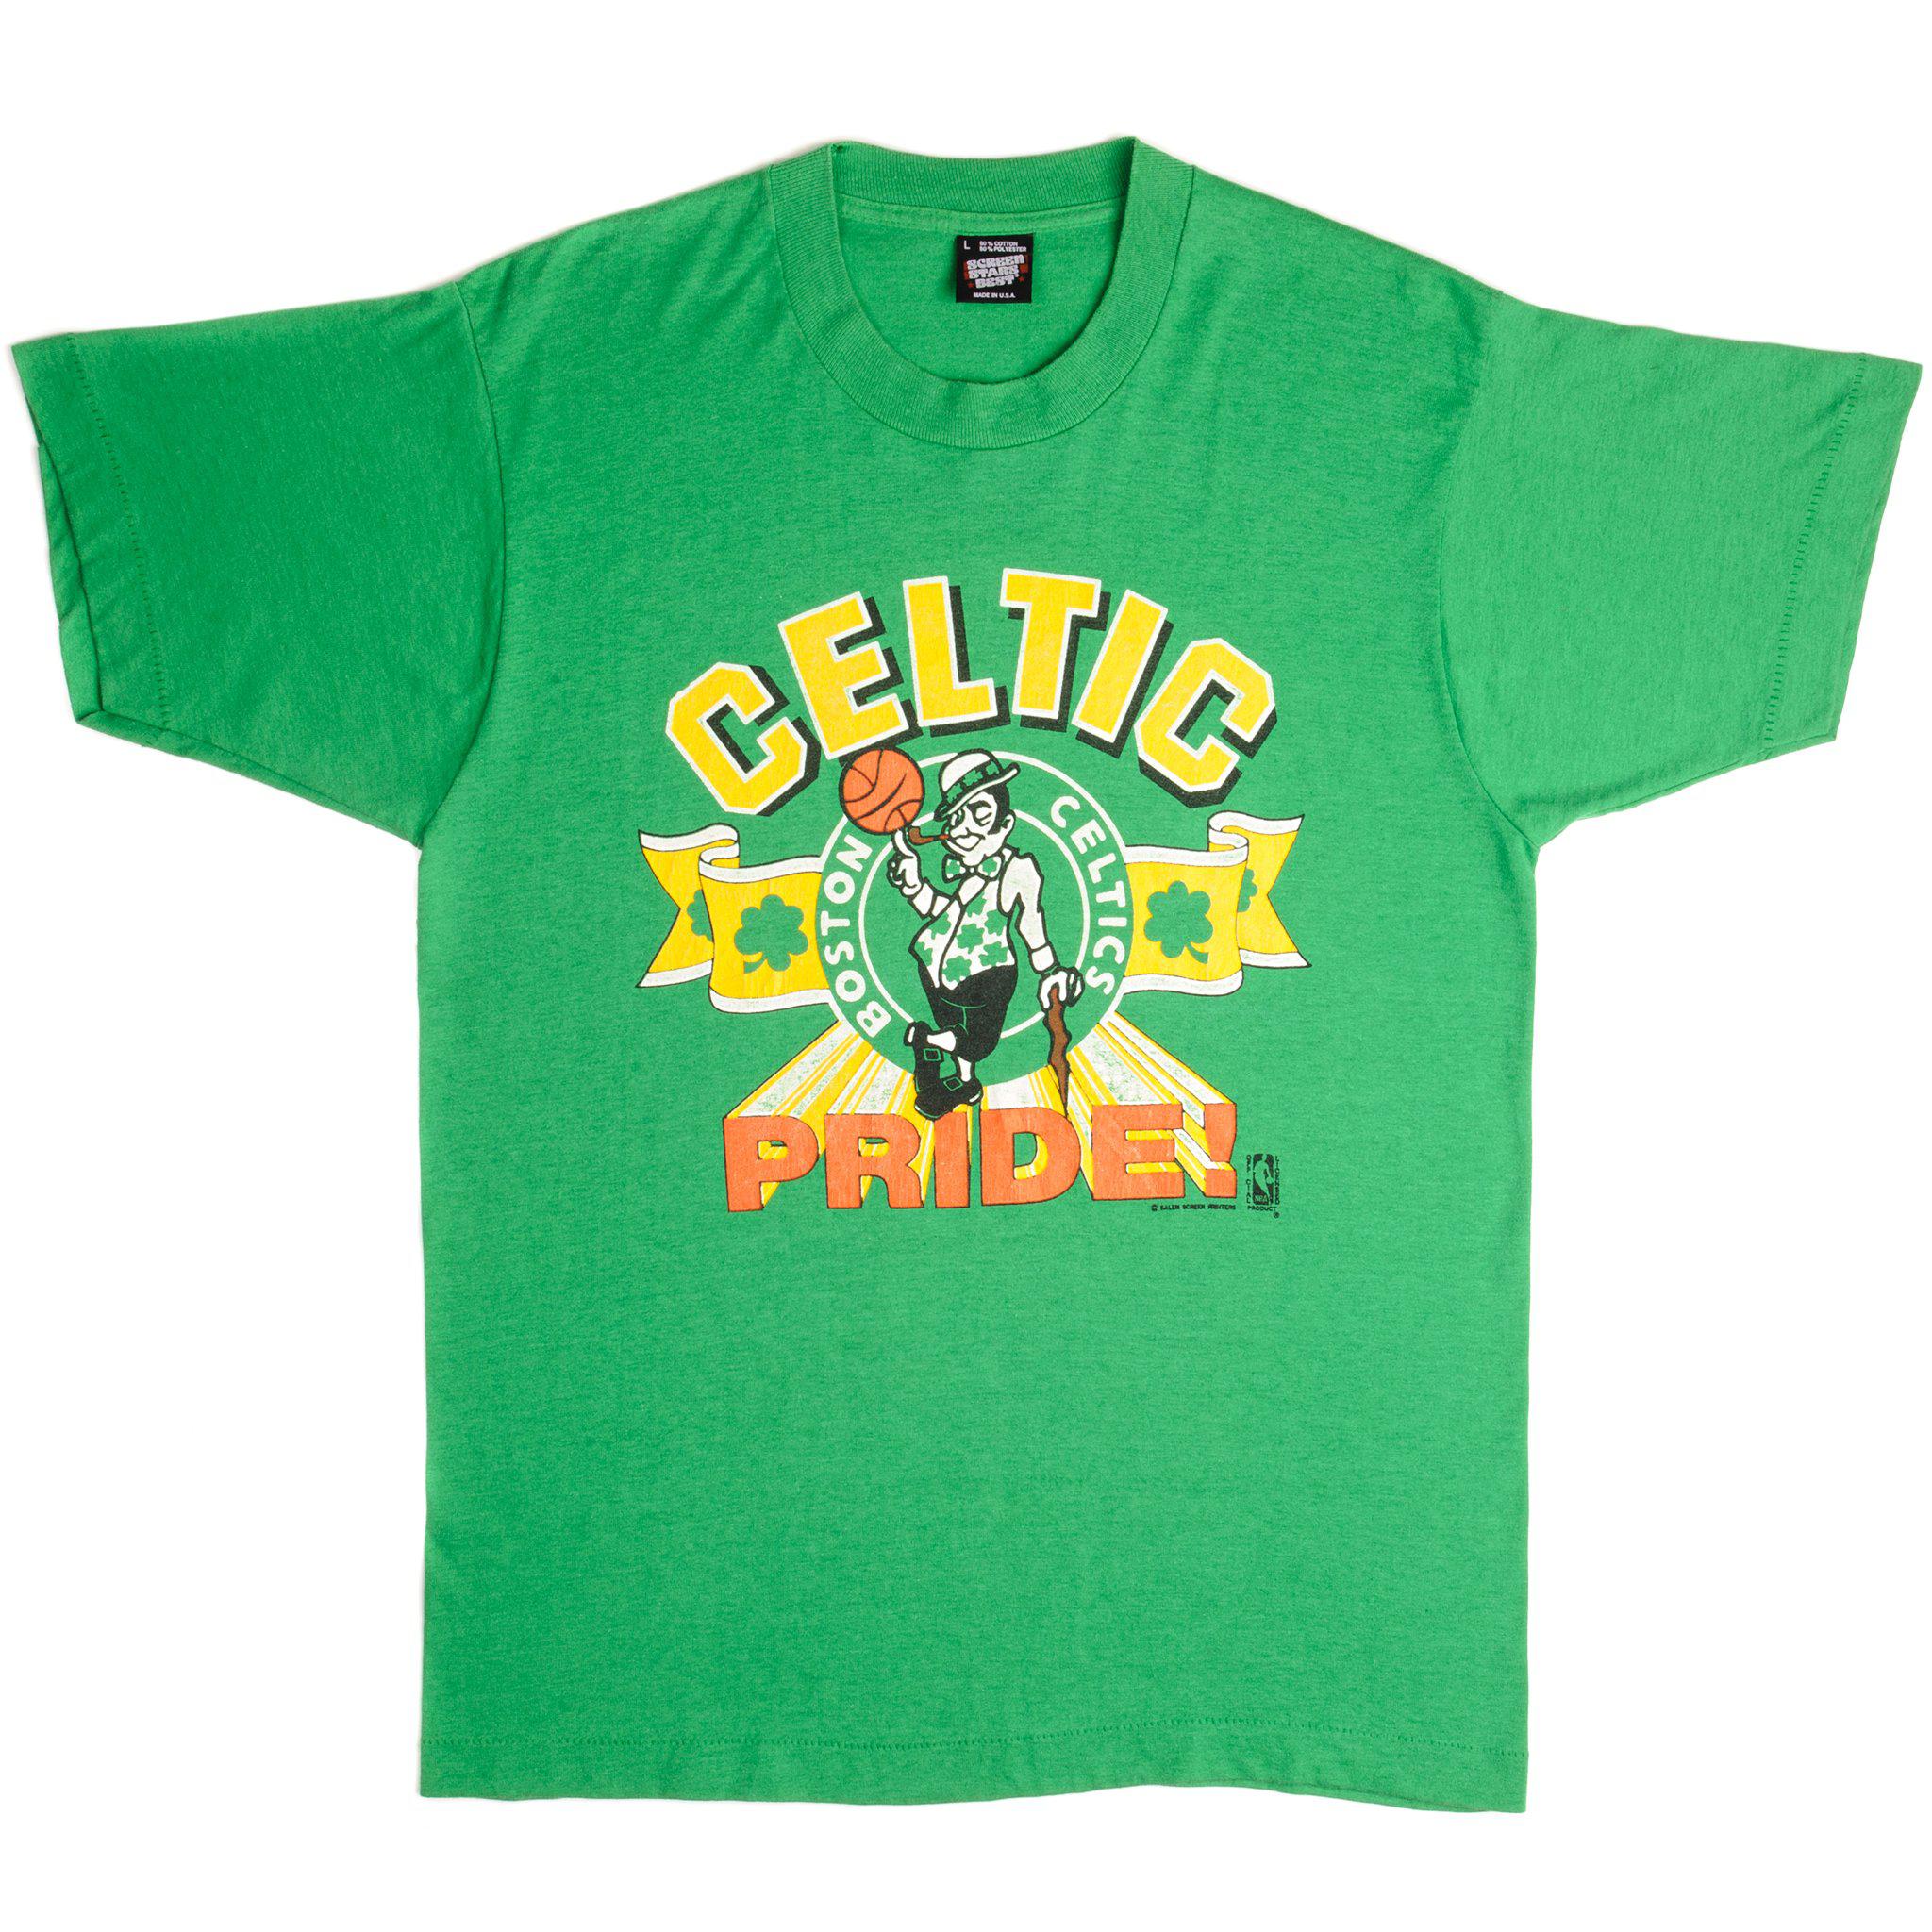 Vintage Boston Celtics I Hate L A Shirt - High-Quality Printed Brand